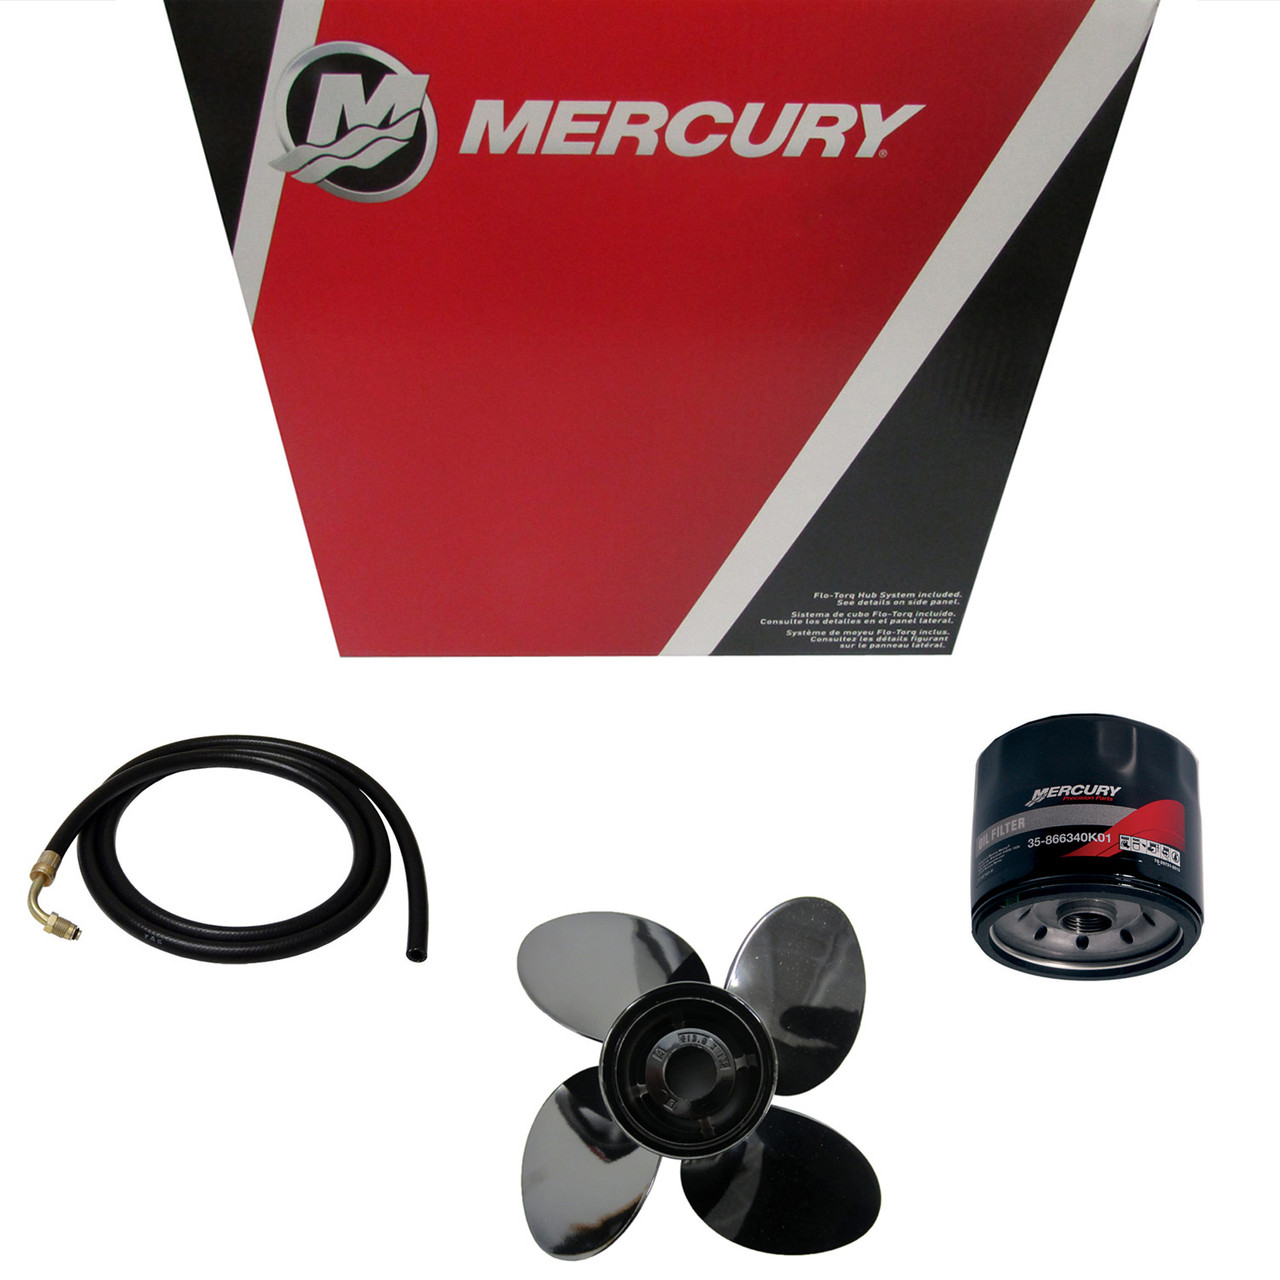 Mercury Marine / Mercruiser New OEM Hose Kit-32 Ft, 32-8M0032630